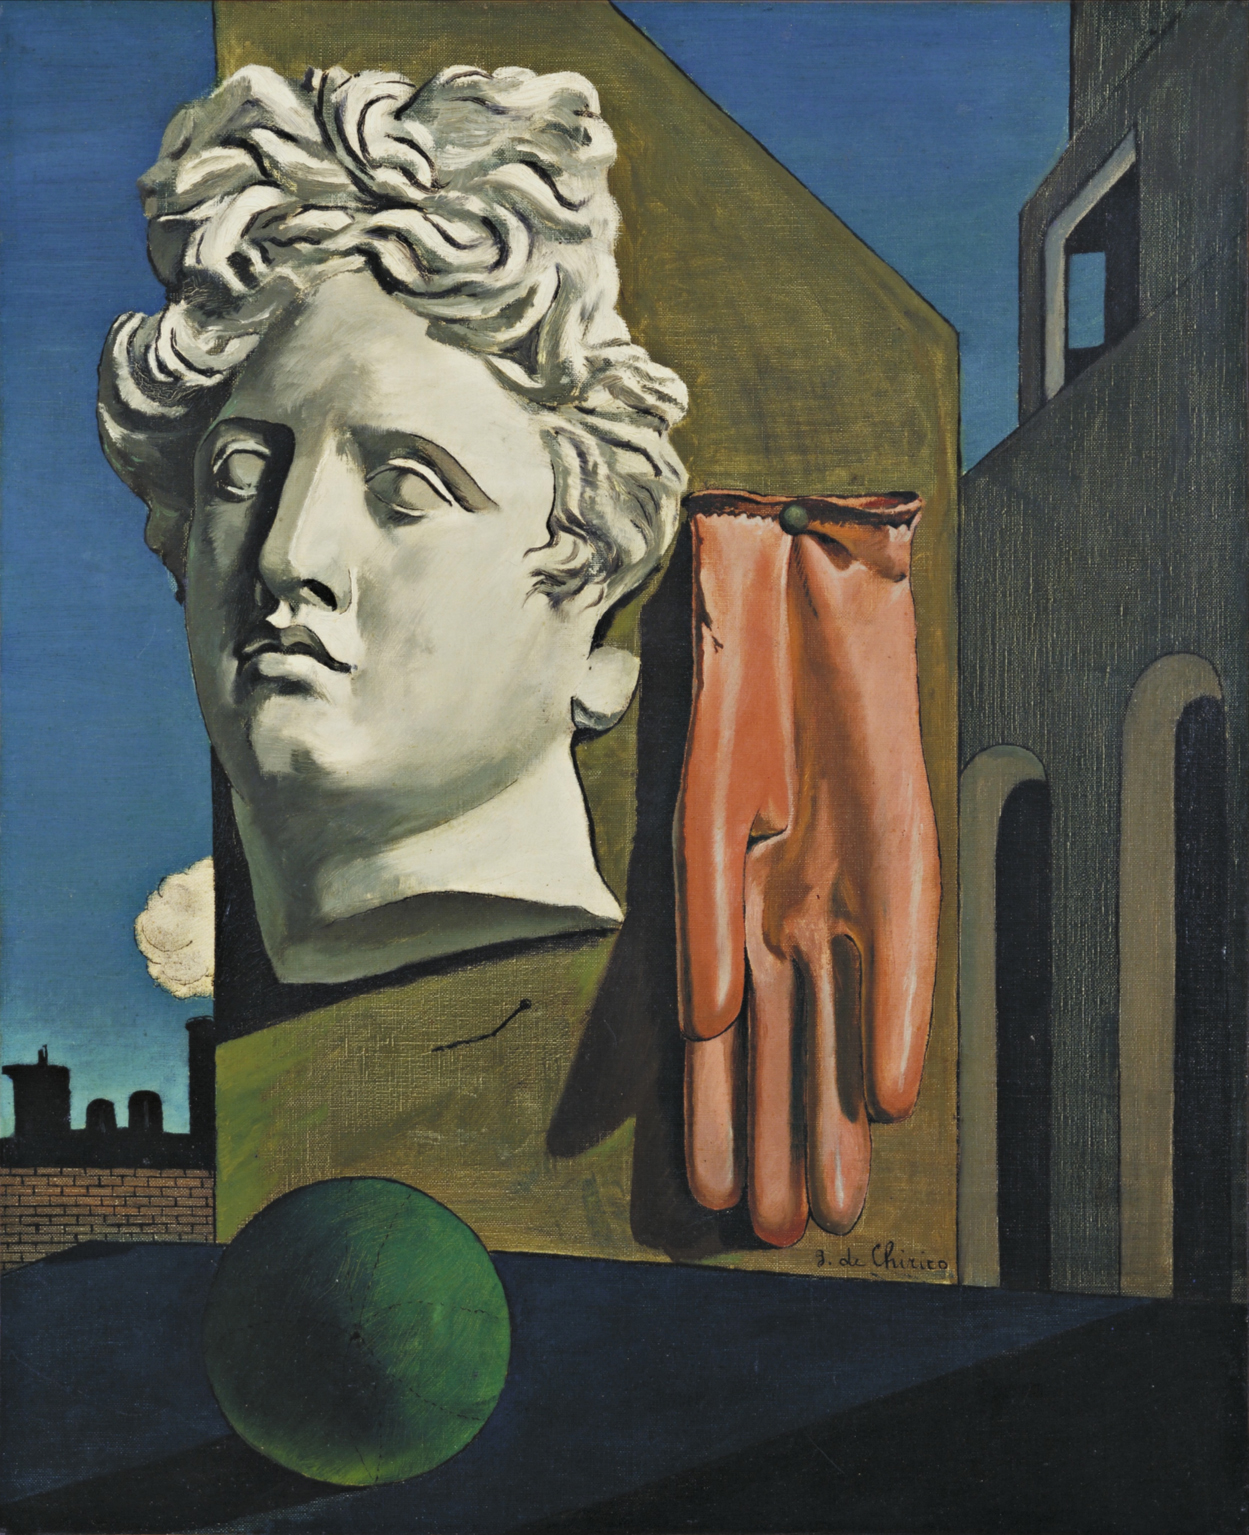 Giorgio de Chirico Song of Love Surrealist painting 